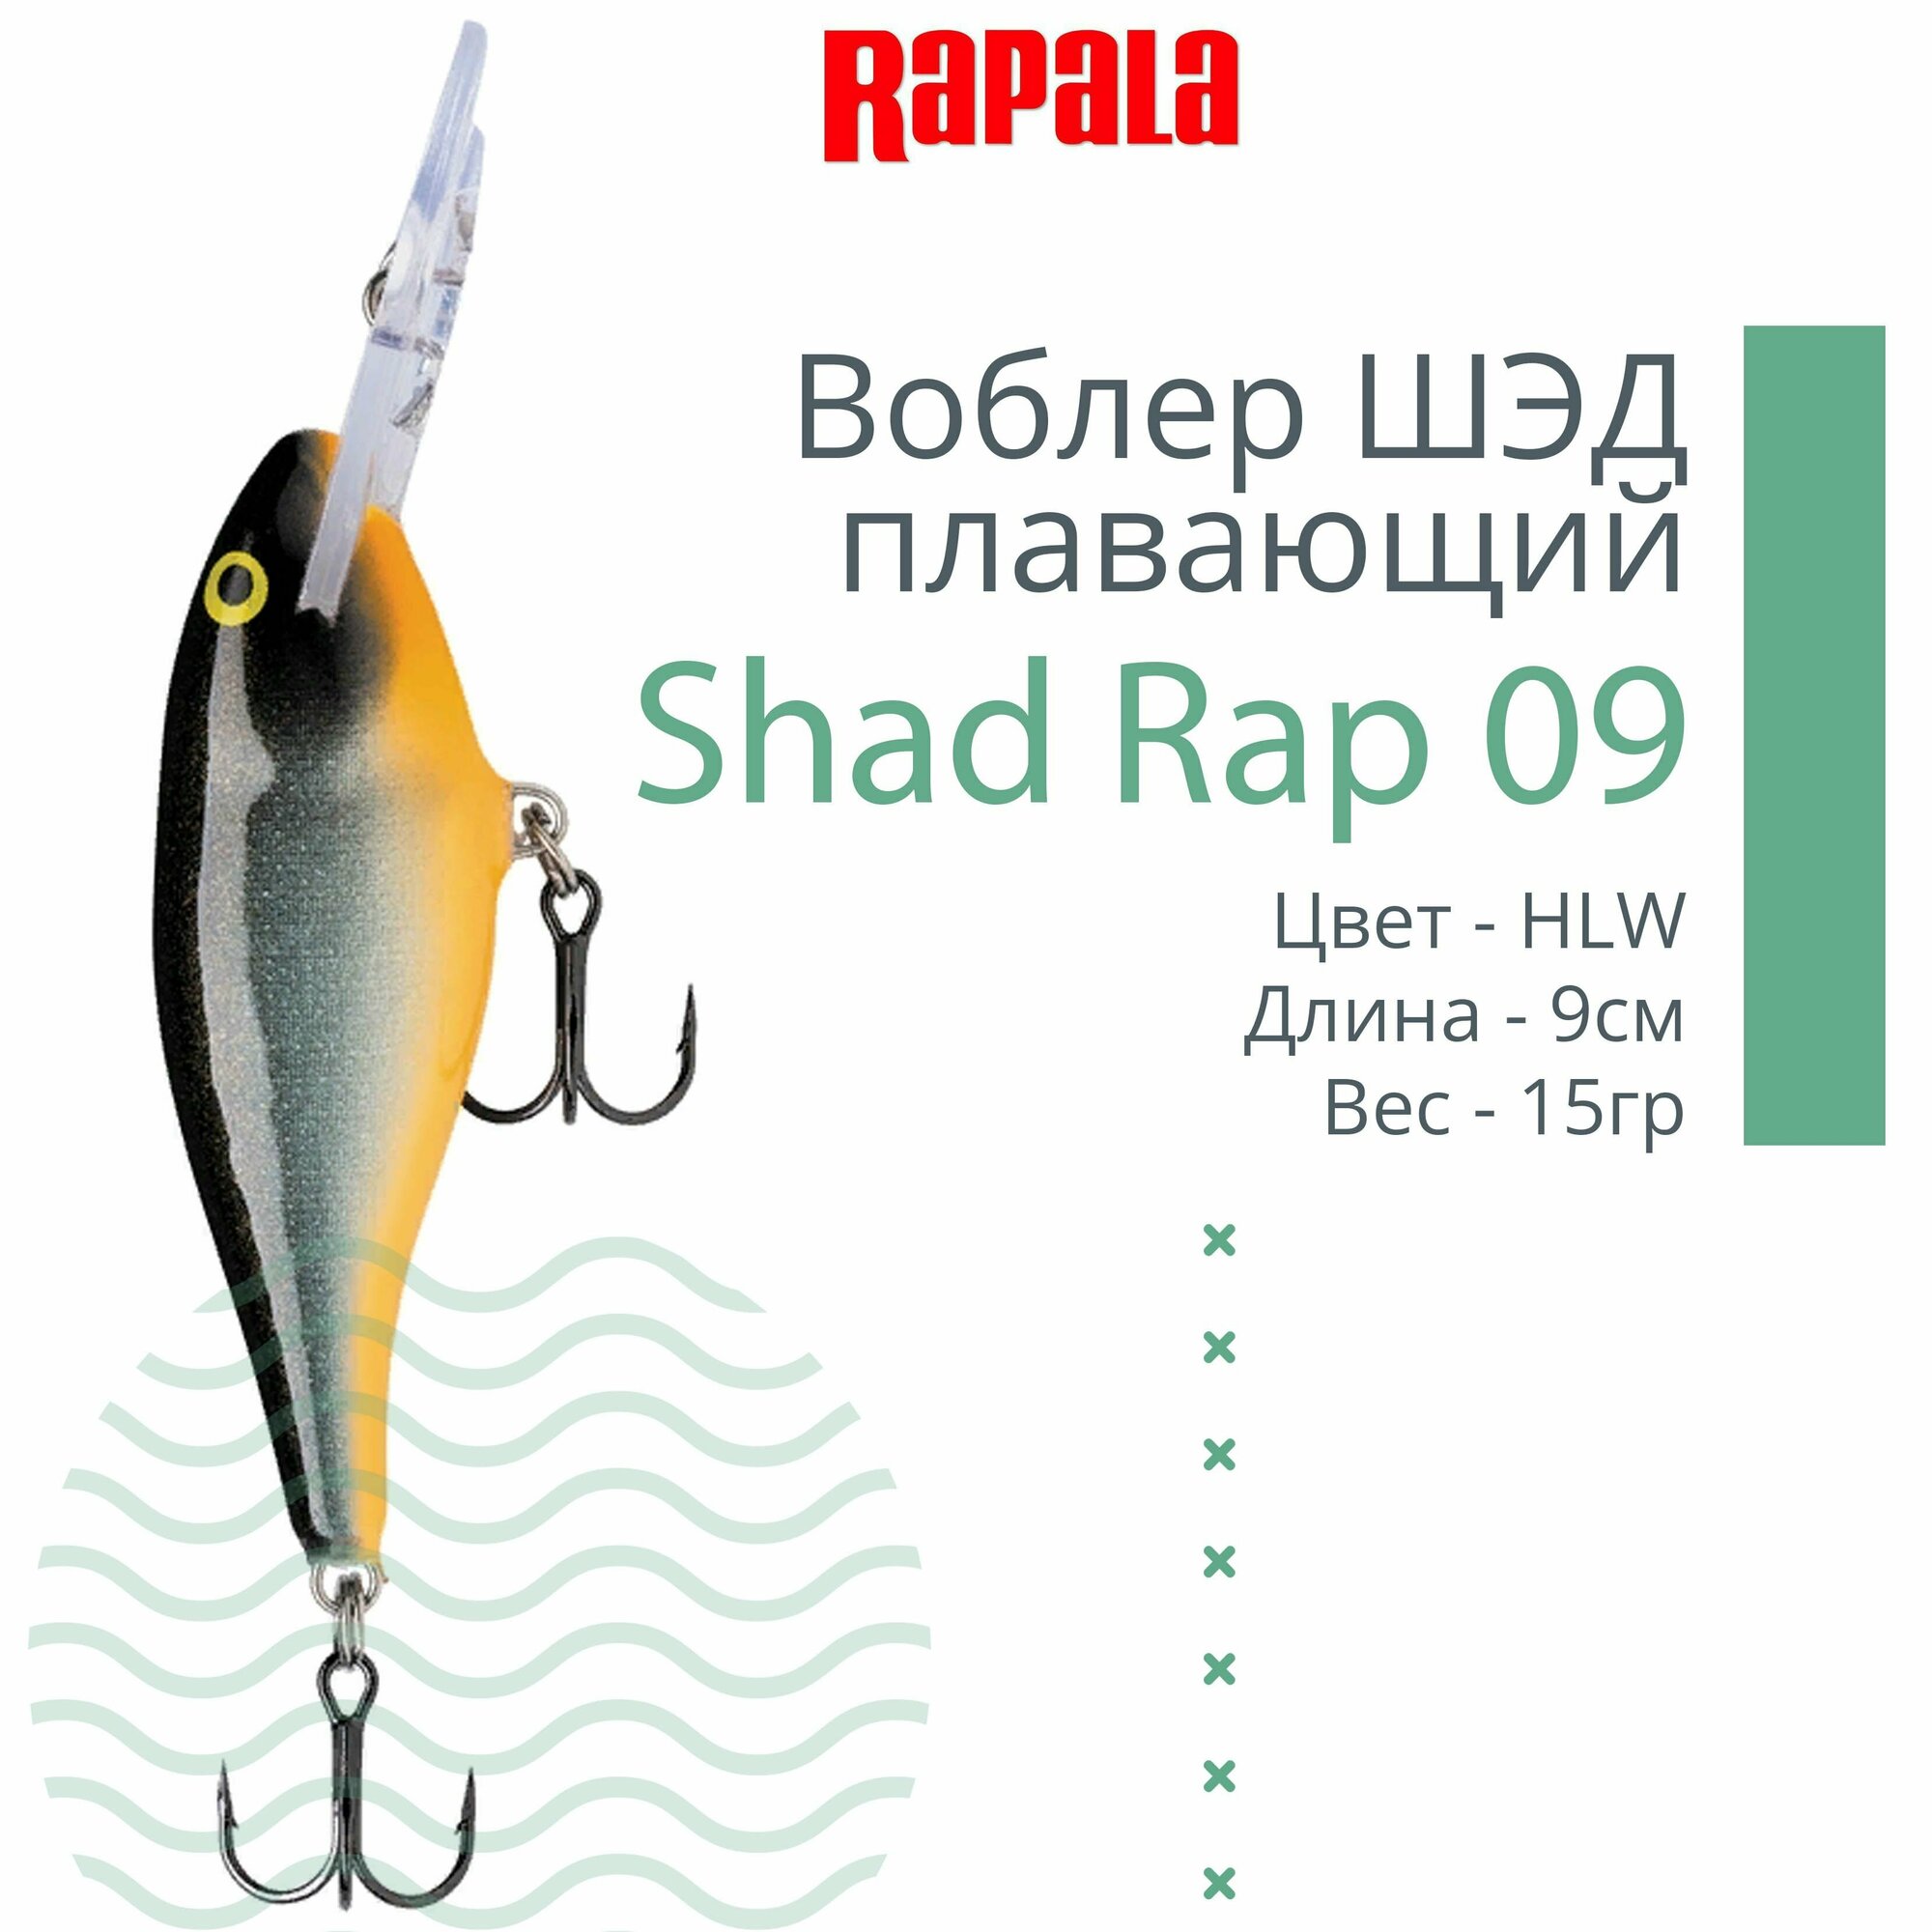 Воблер для рыбалки RAPALA Shad Rap 09, 9см, 15гр, цвет HLW, плавающий